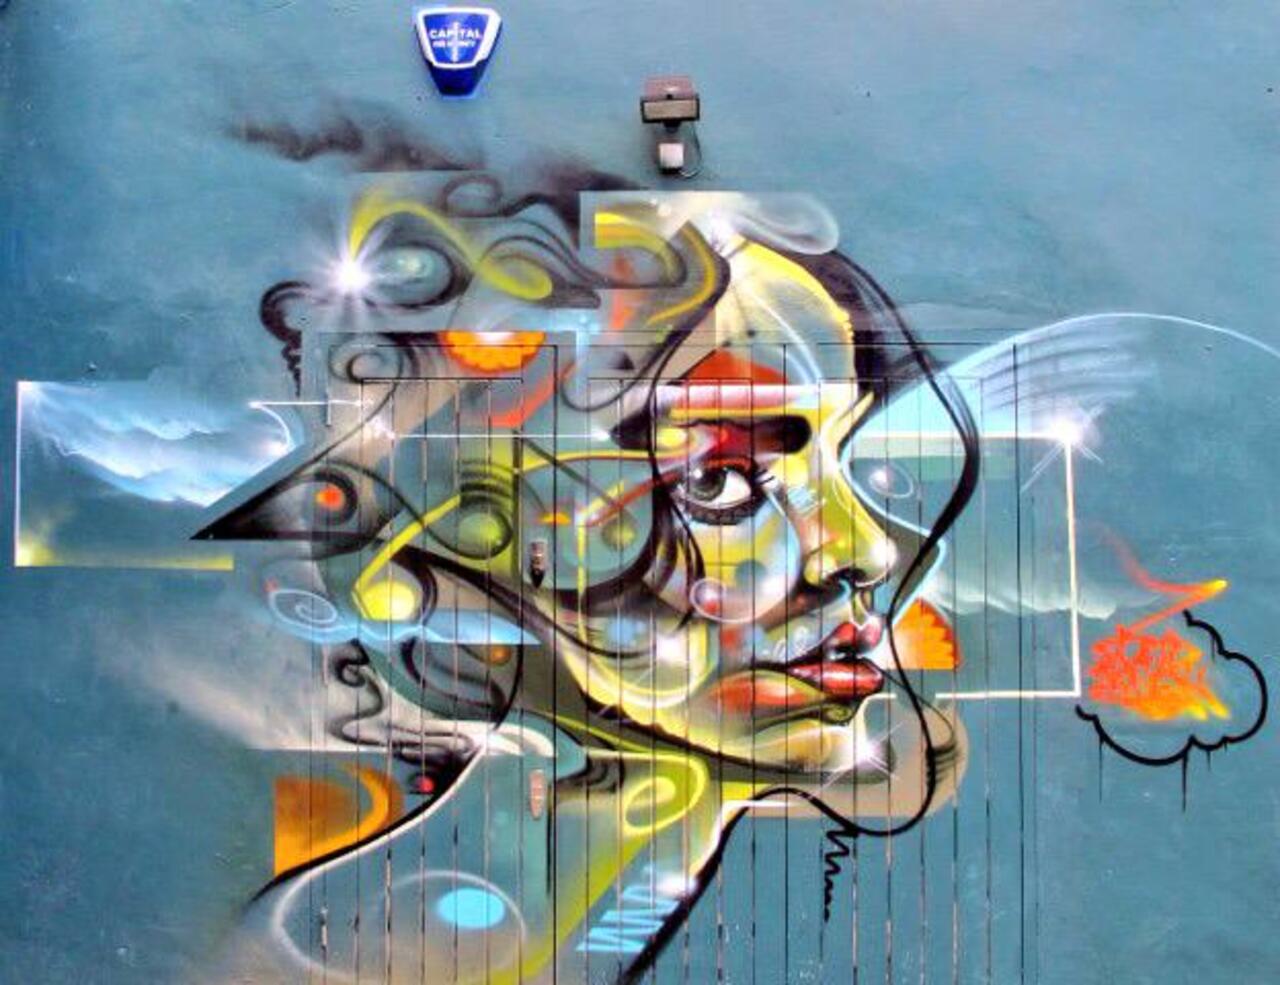 “@Pitchuskita: Mr Cenz
London
#streetart #art #mural #graffiti http://t.co/9AdykBEV1k”